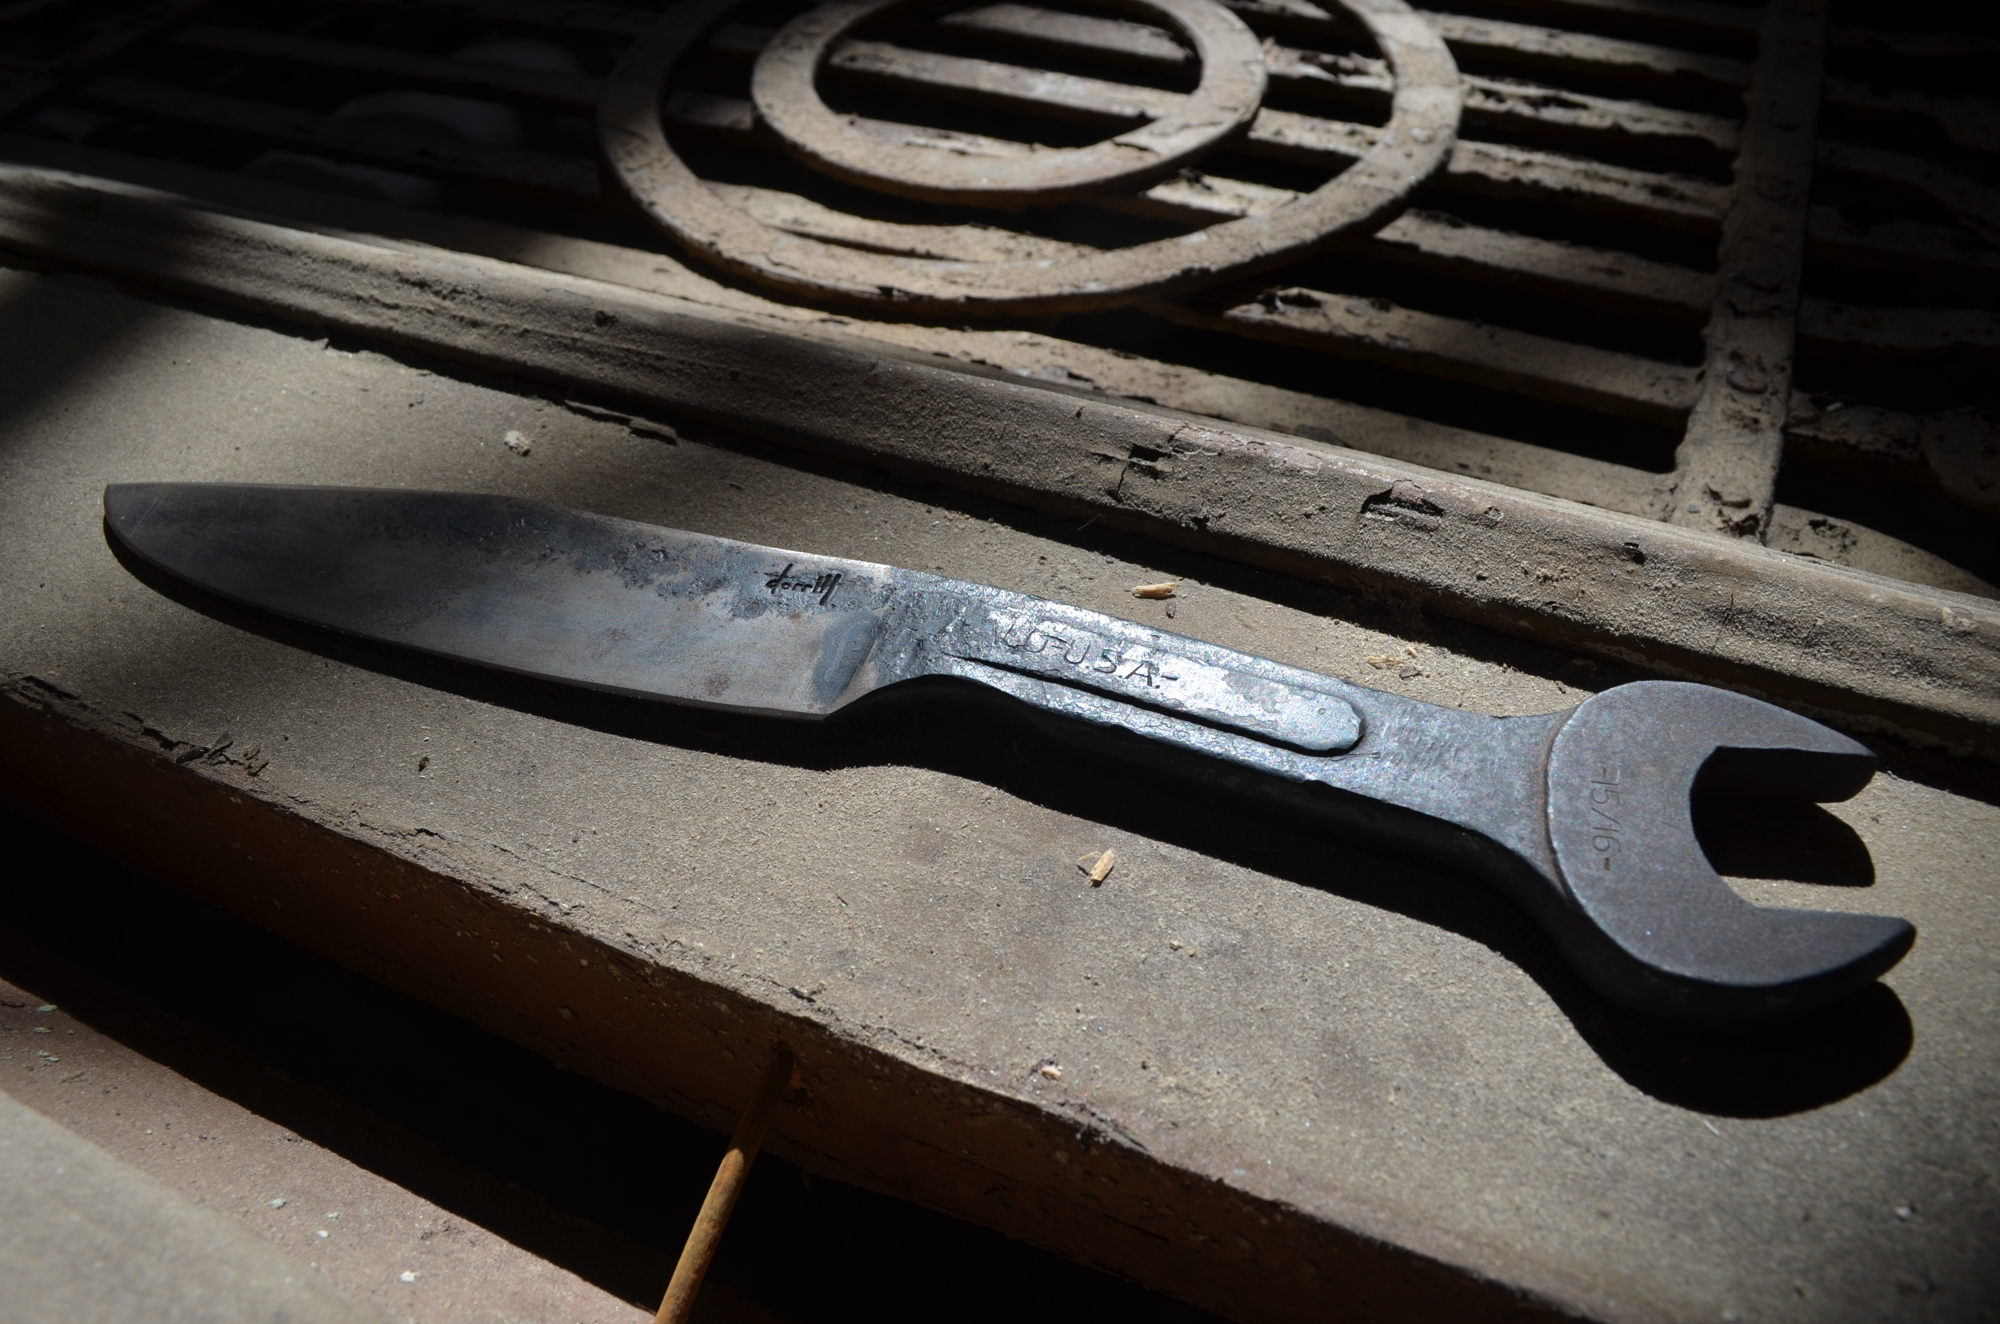 Blacksmith Bradley Dorrill forges knives, like this custom wrench/knife combination.